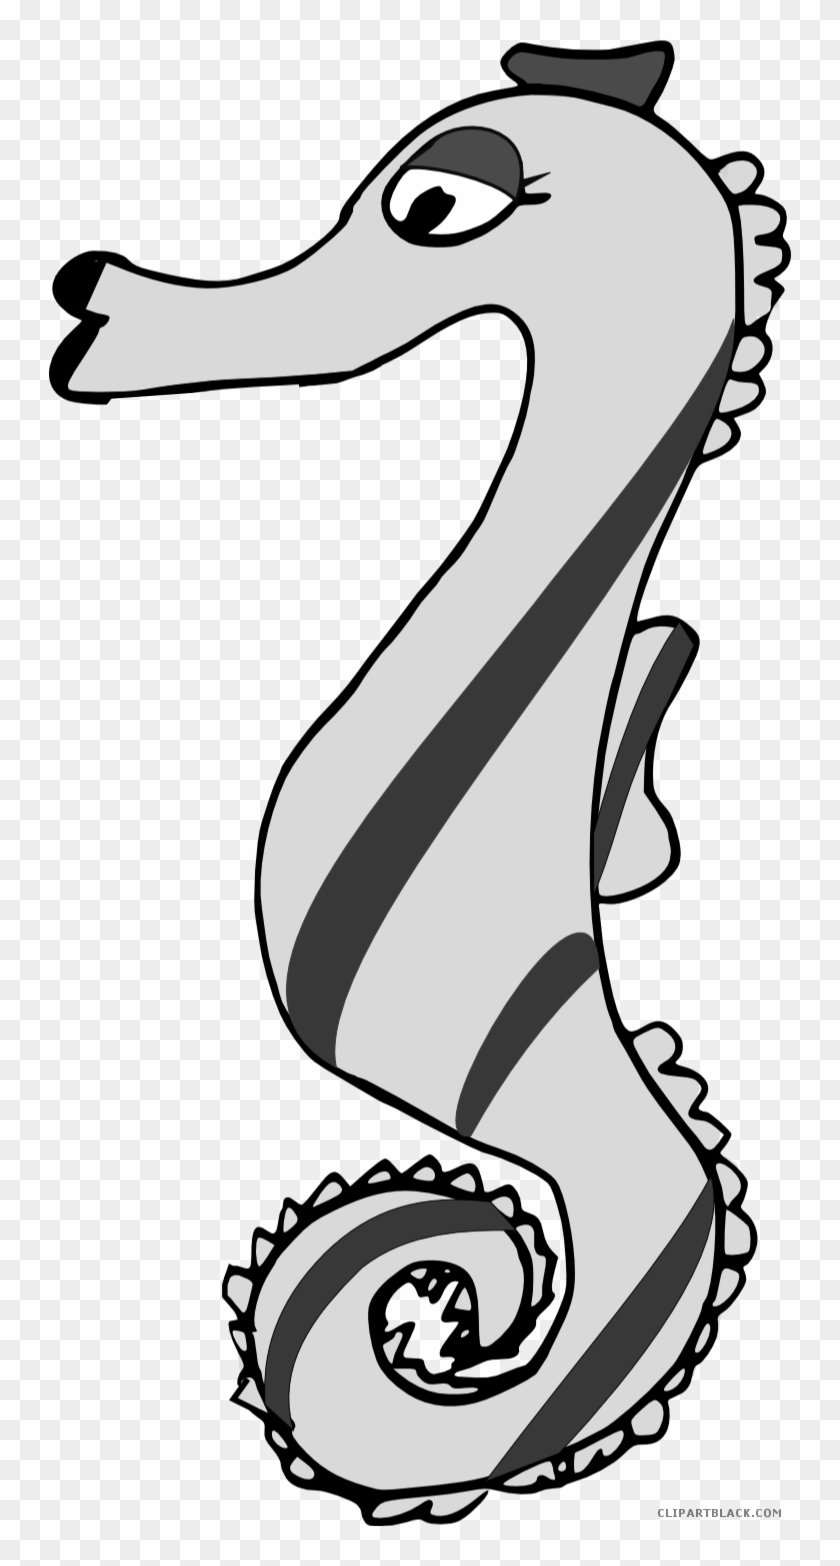 Seahorse Animal Free Black White Clipart Images Clipartblack - Clip Art #400374